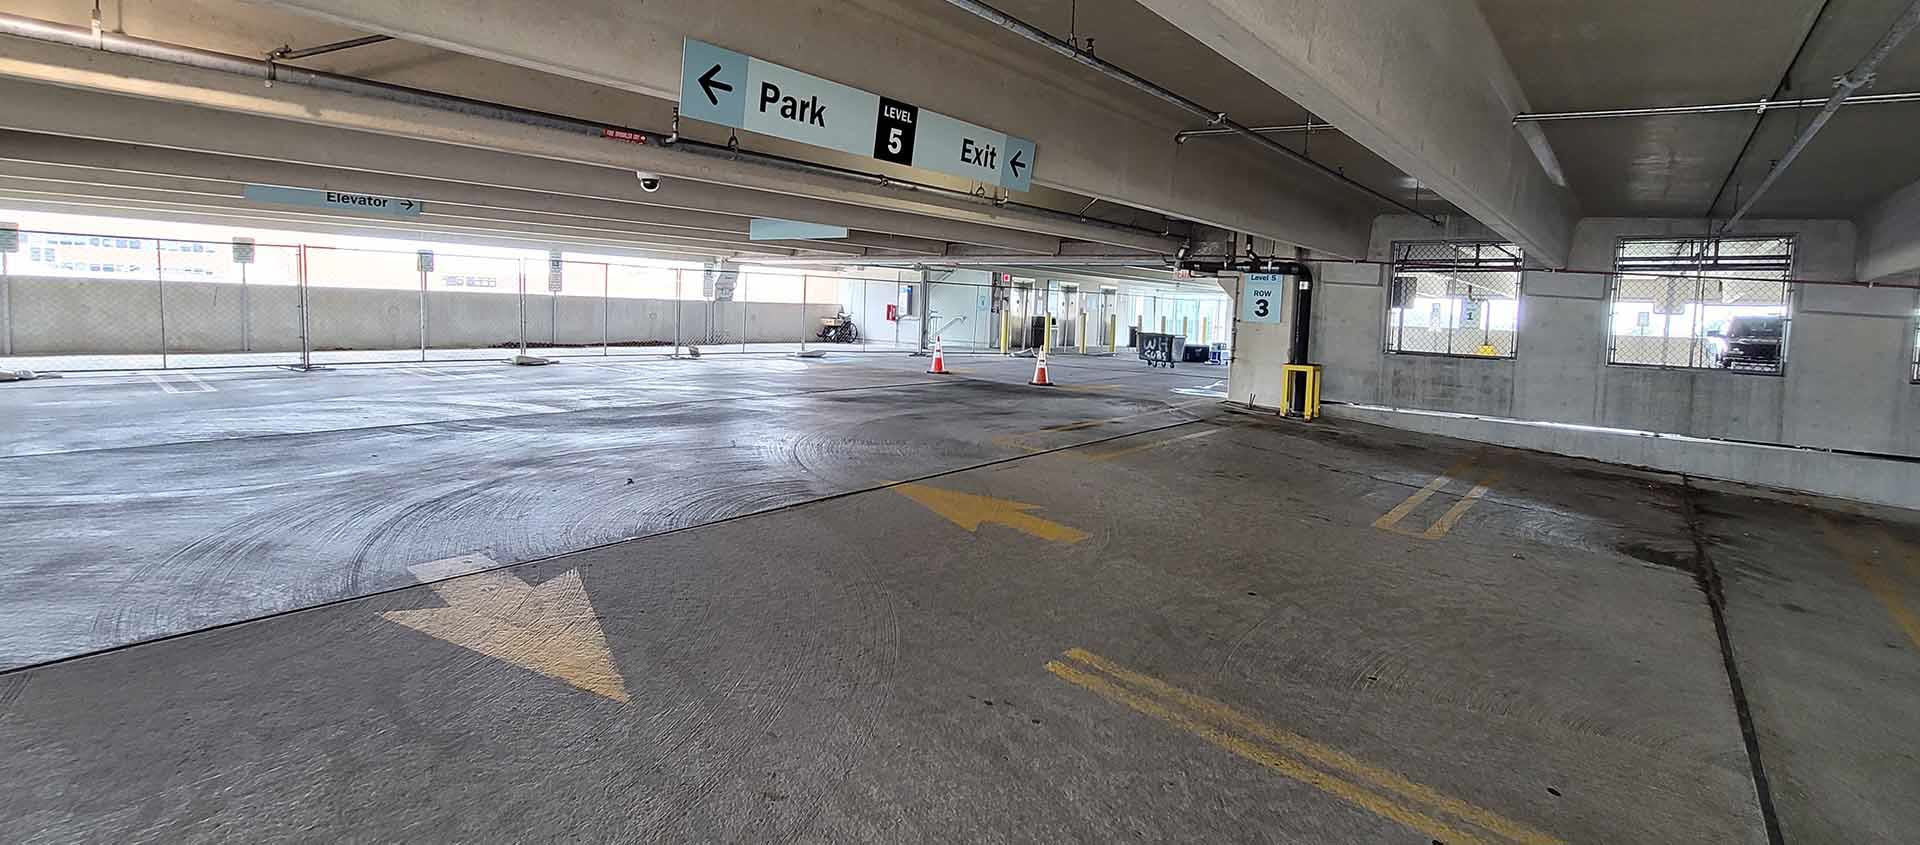 Concrete parking garage interior fenced off for maintenance